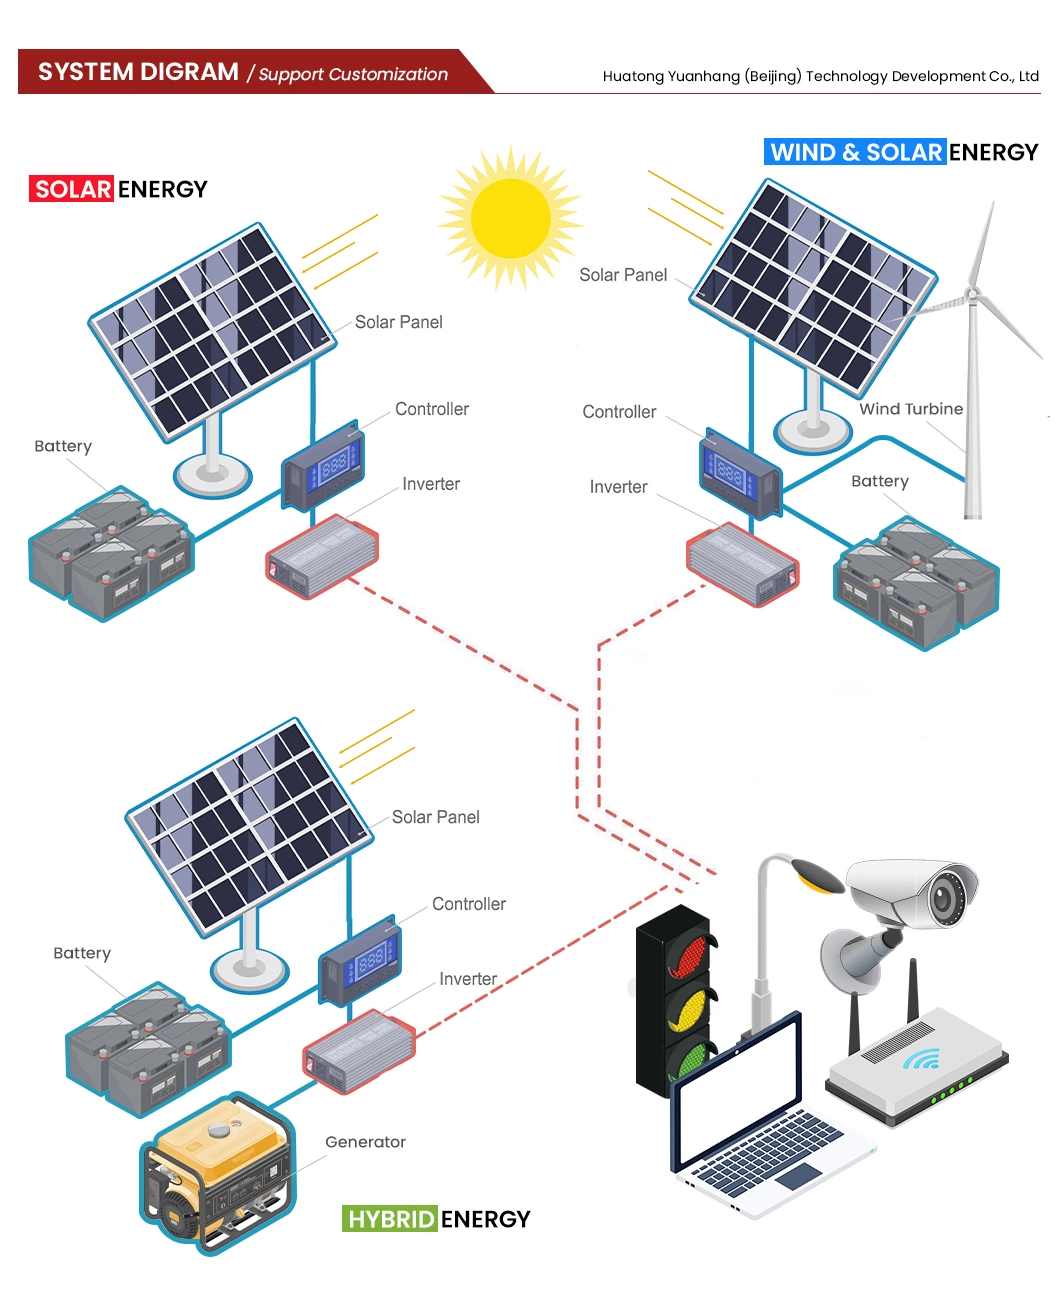 Htonetech 100W Mono-Crystalline Solar Panel Suppliers 20 Kw Solar System China 15kw Wind Solar Hybrid Power System with Portable Wind Generator